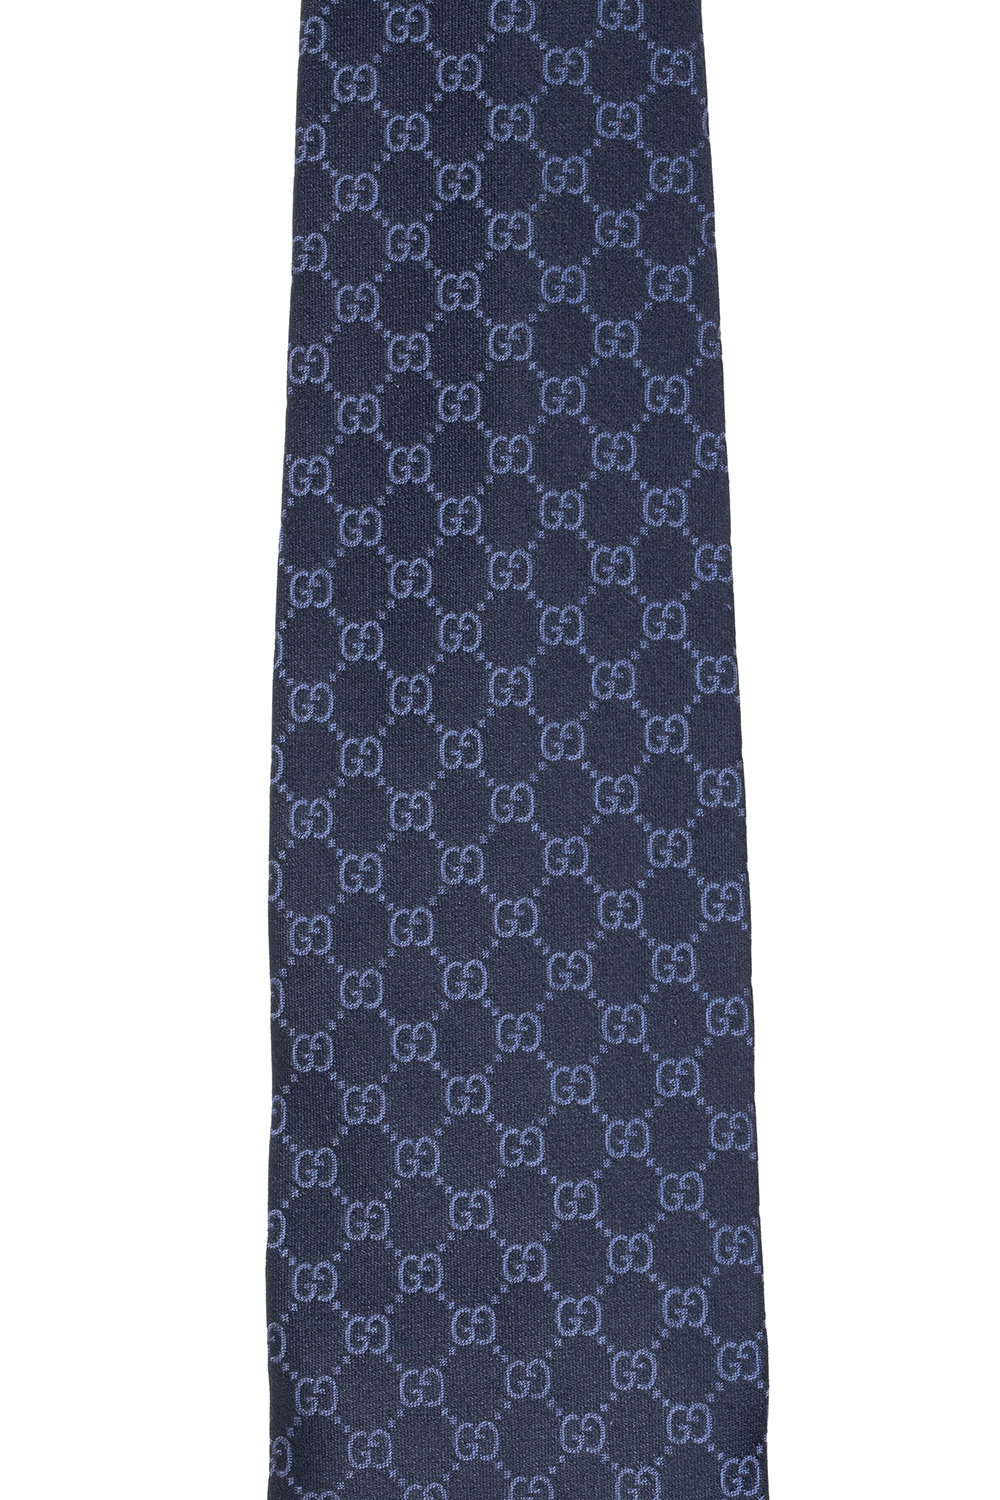 IetpShops | Gucci adidas gazelle light gray color chart blue black 